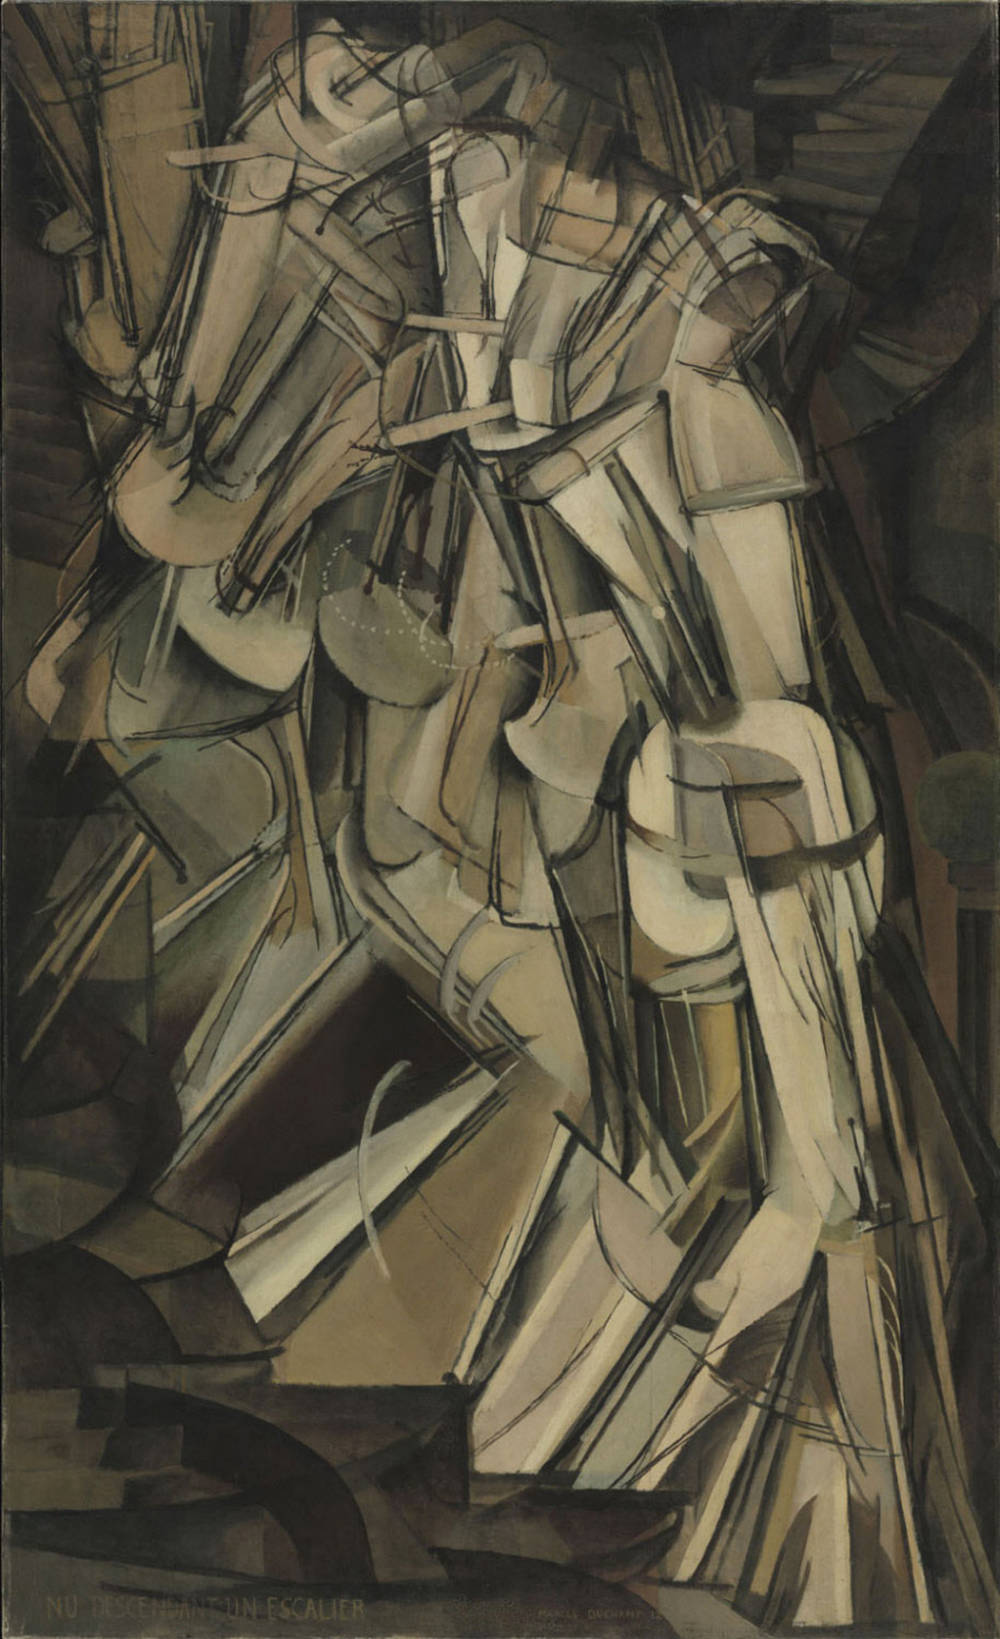  Marcel Duchamp, Nude Descending a Staircase, 1912 